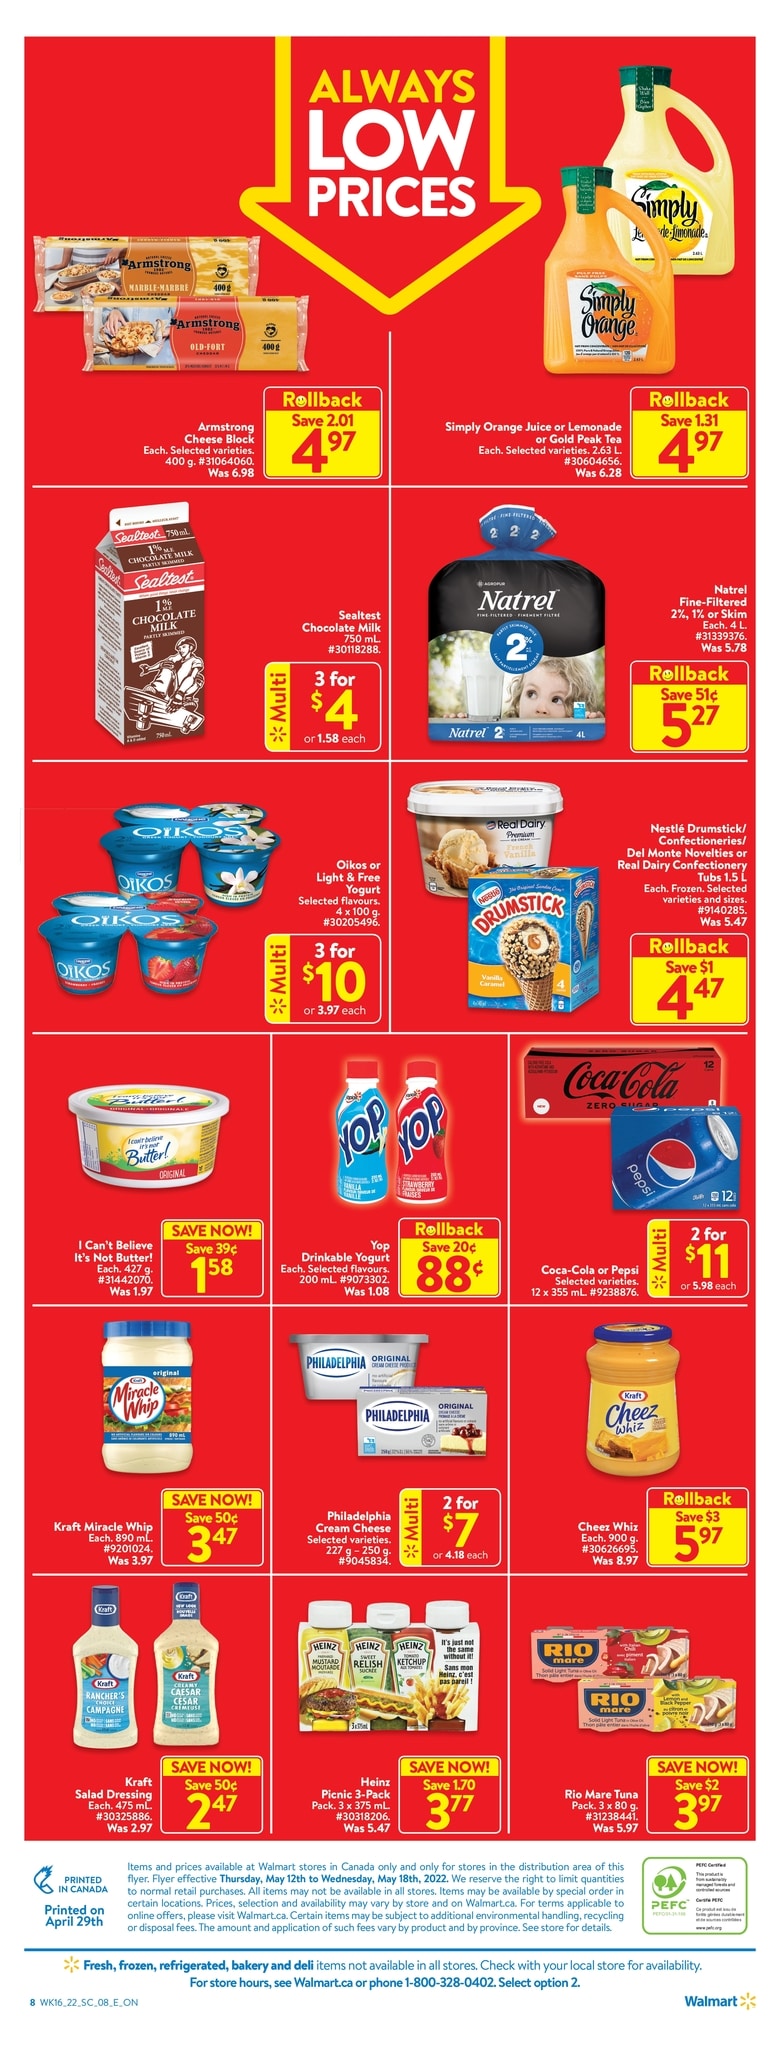 Walmart - Weekly Flyer Specials - Page 3